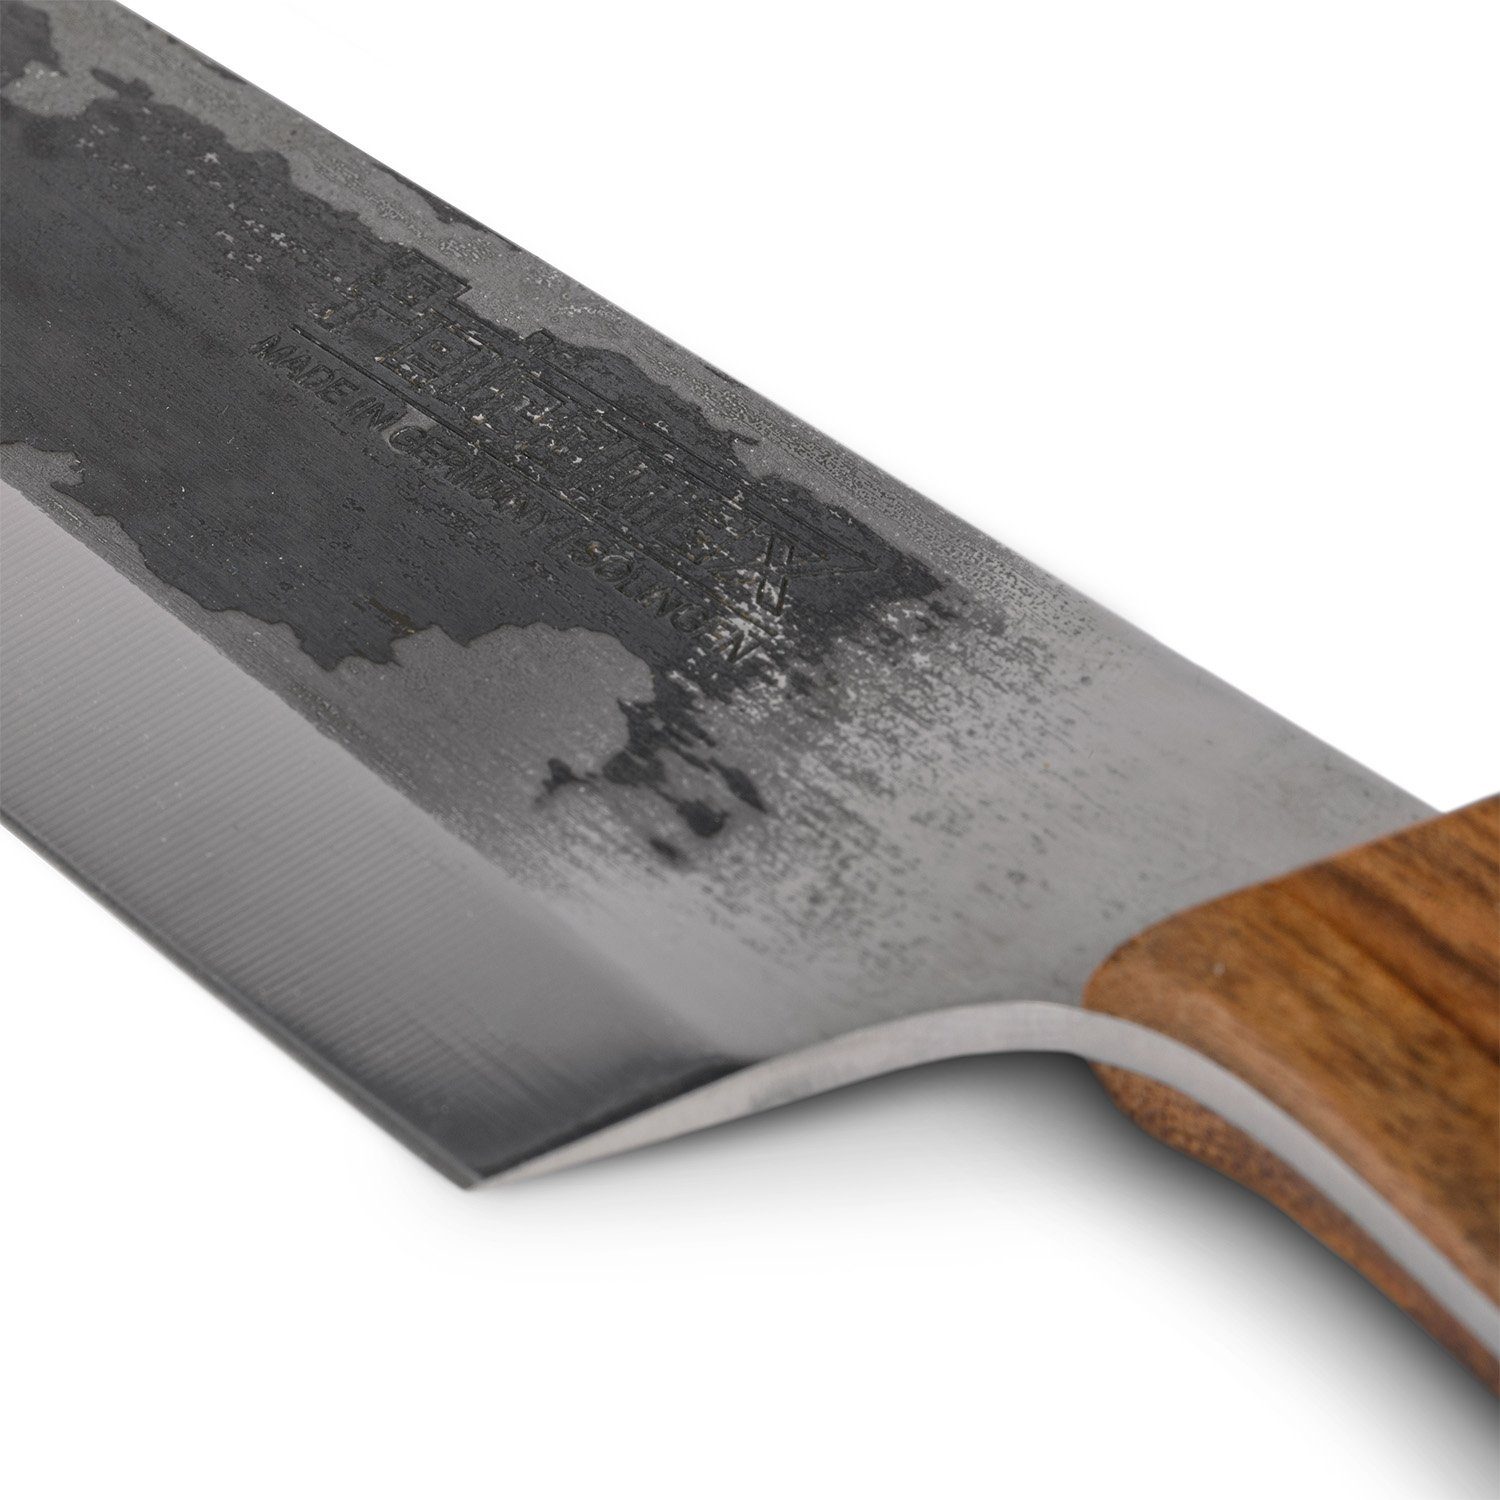 Petromax Hackmesser Hack-Messer Solingen 33cm 17 hochwertigen Glattschliff Solingen, cm, langlebig, Klingenstahl Klinge aus